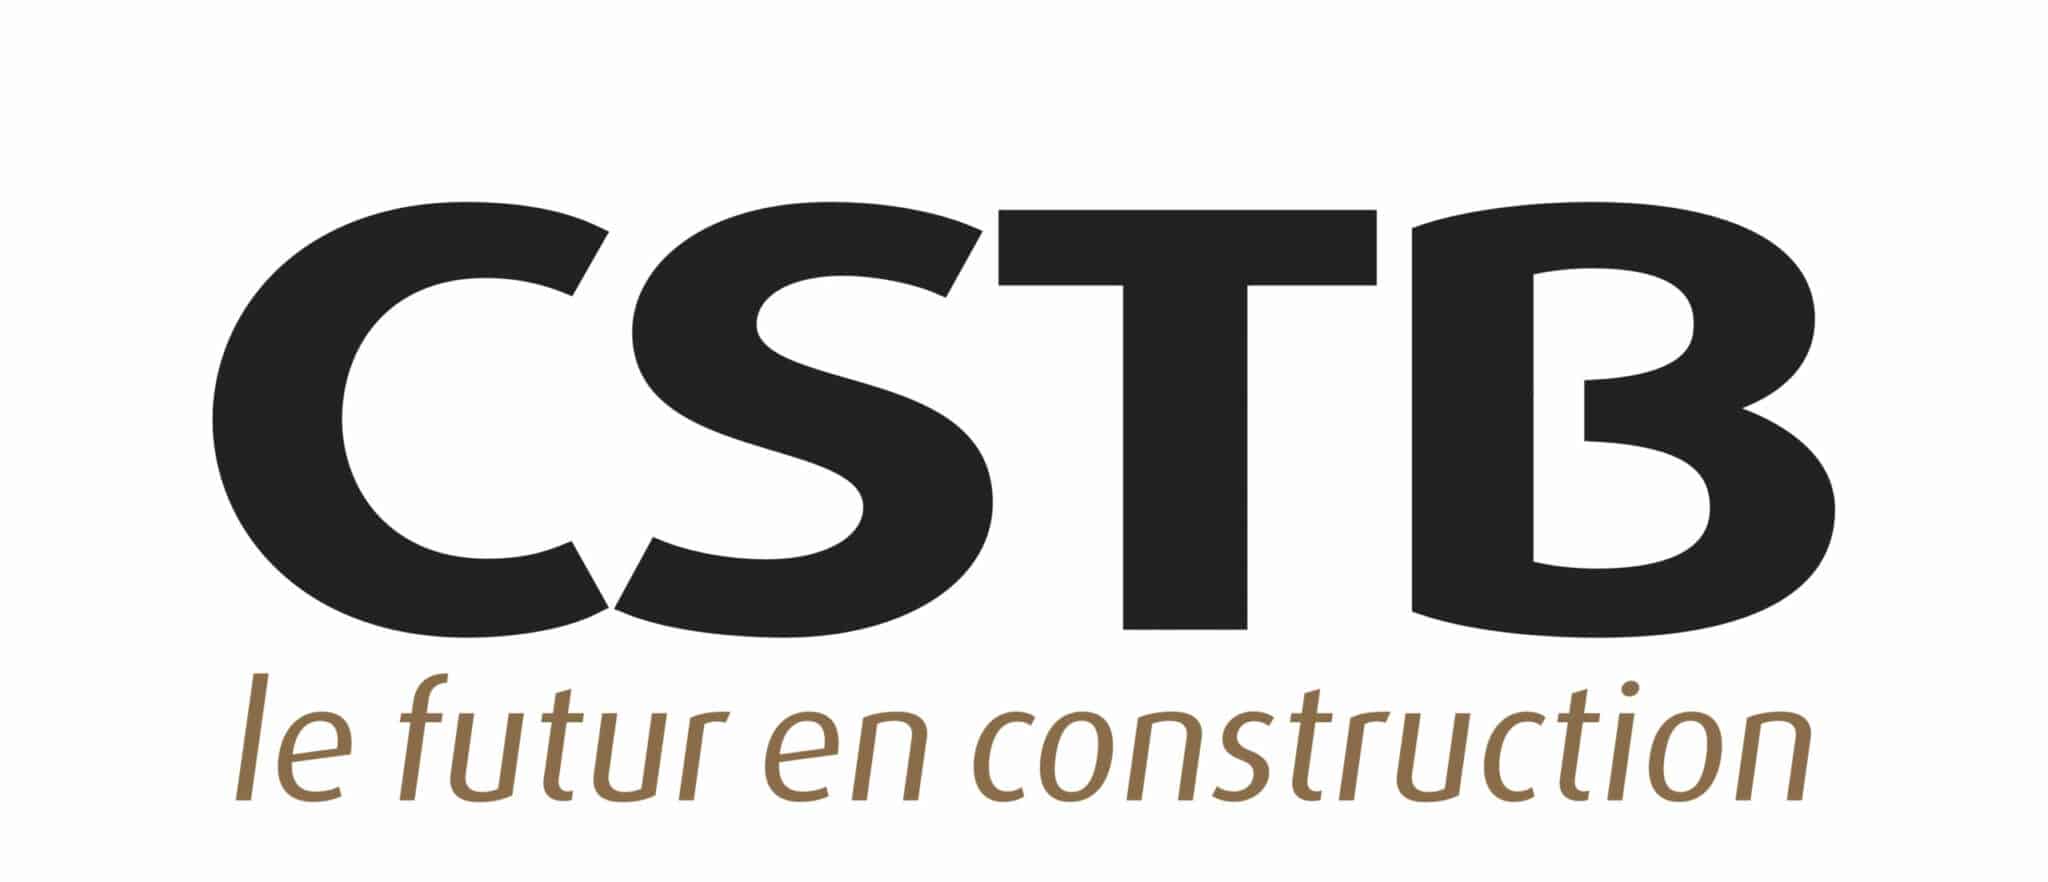 CSTB-logo-le-futur-en-construction-300x94